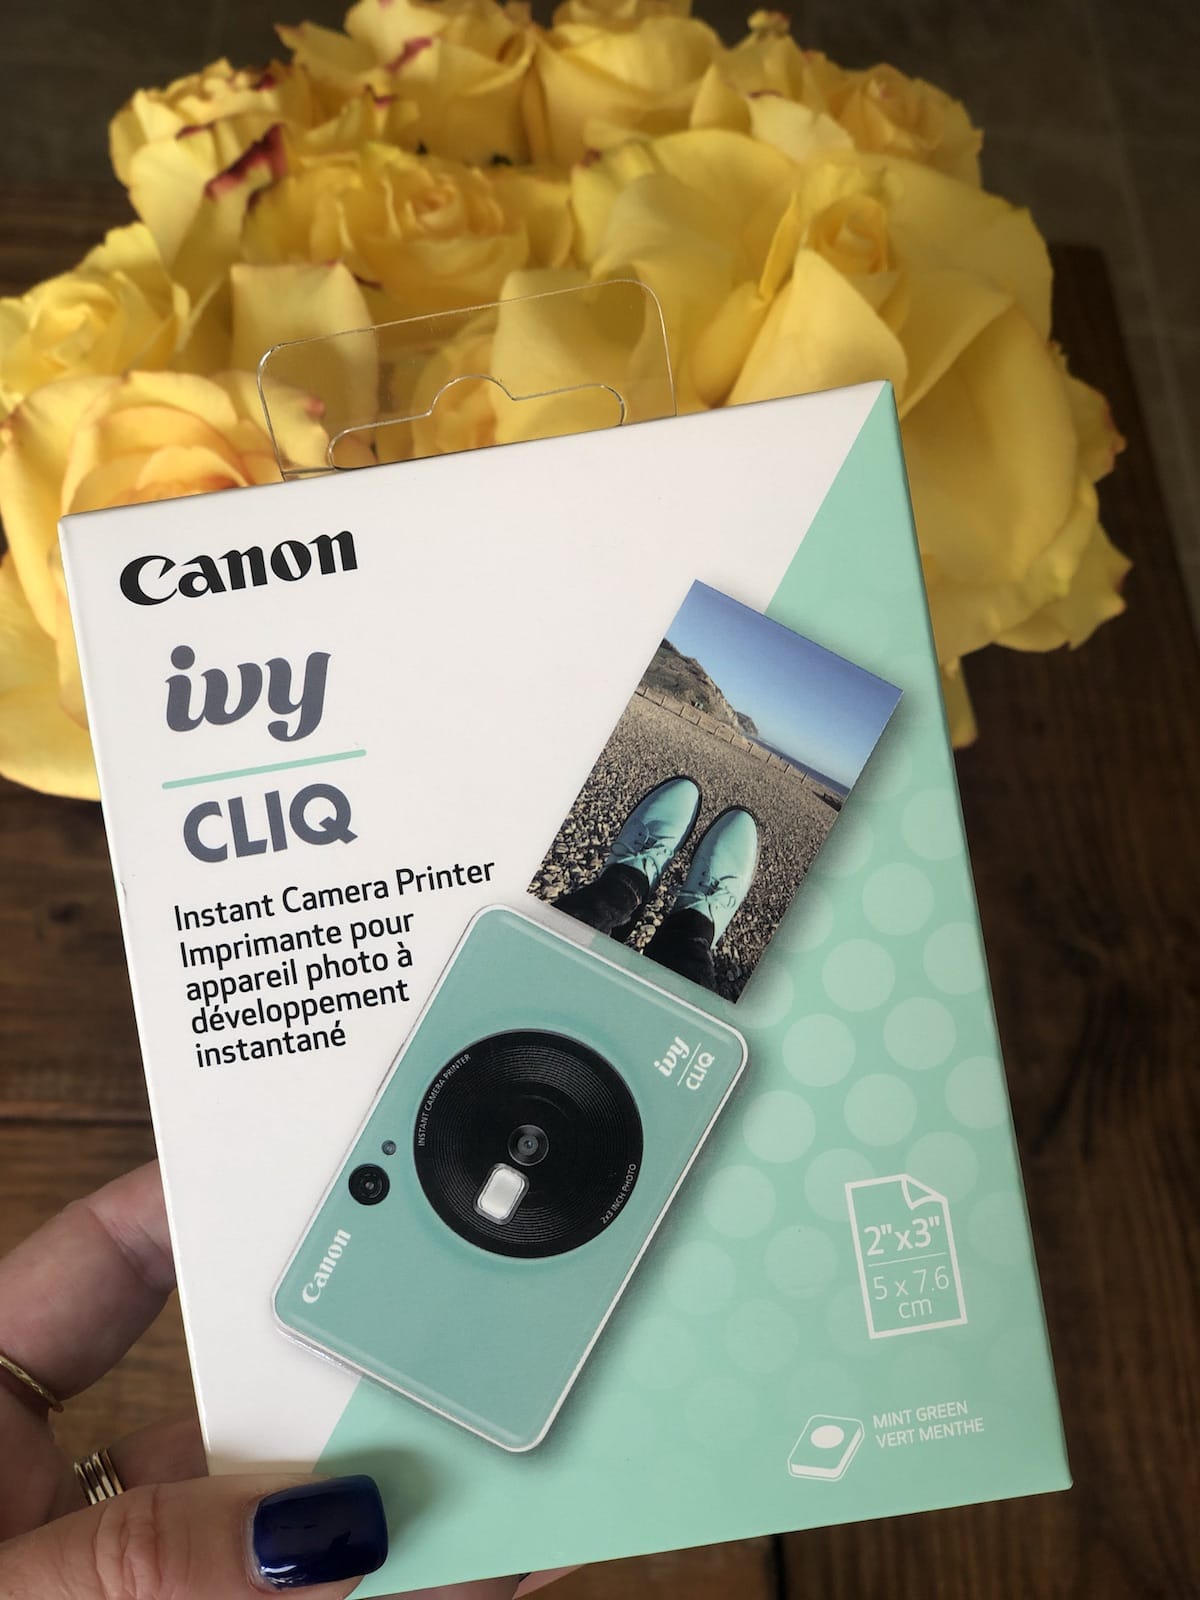 Canon IVY Mini Photo Printers & Cameras - Best Buy